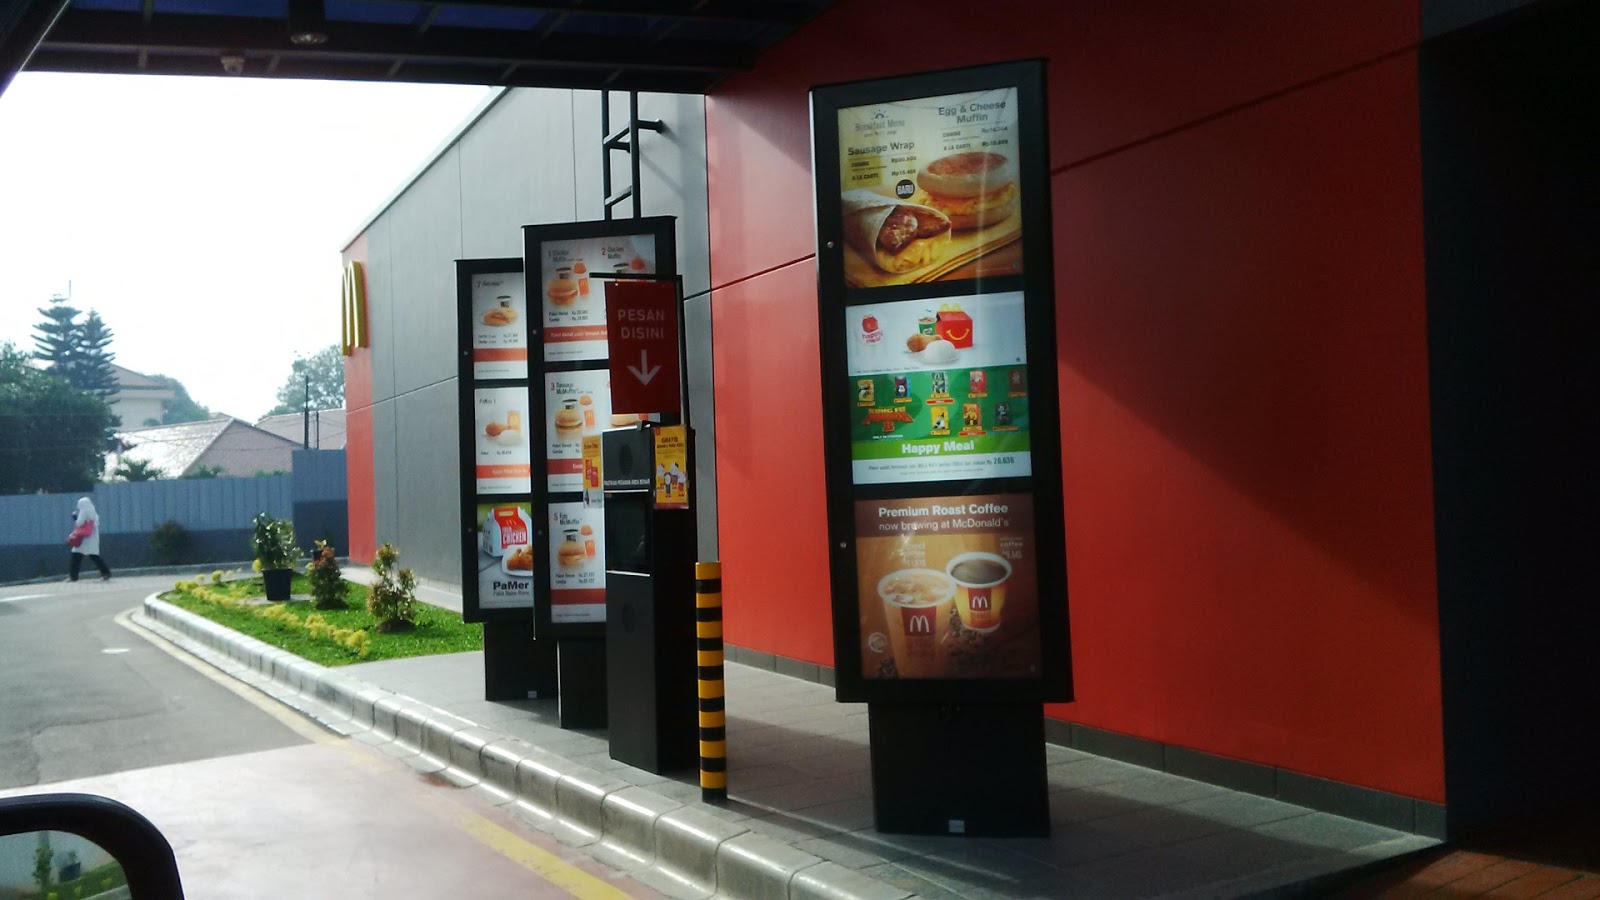 Drive Thru Mcd Menu - Promo McDonalds Terbaru Khusus Drive Thru